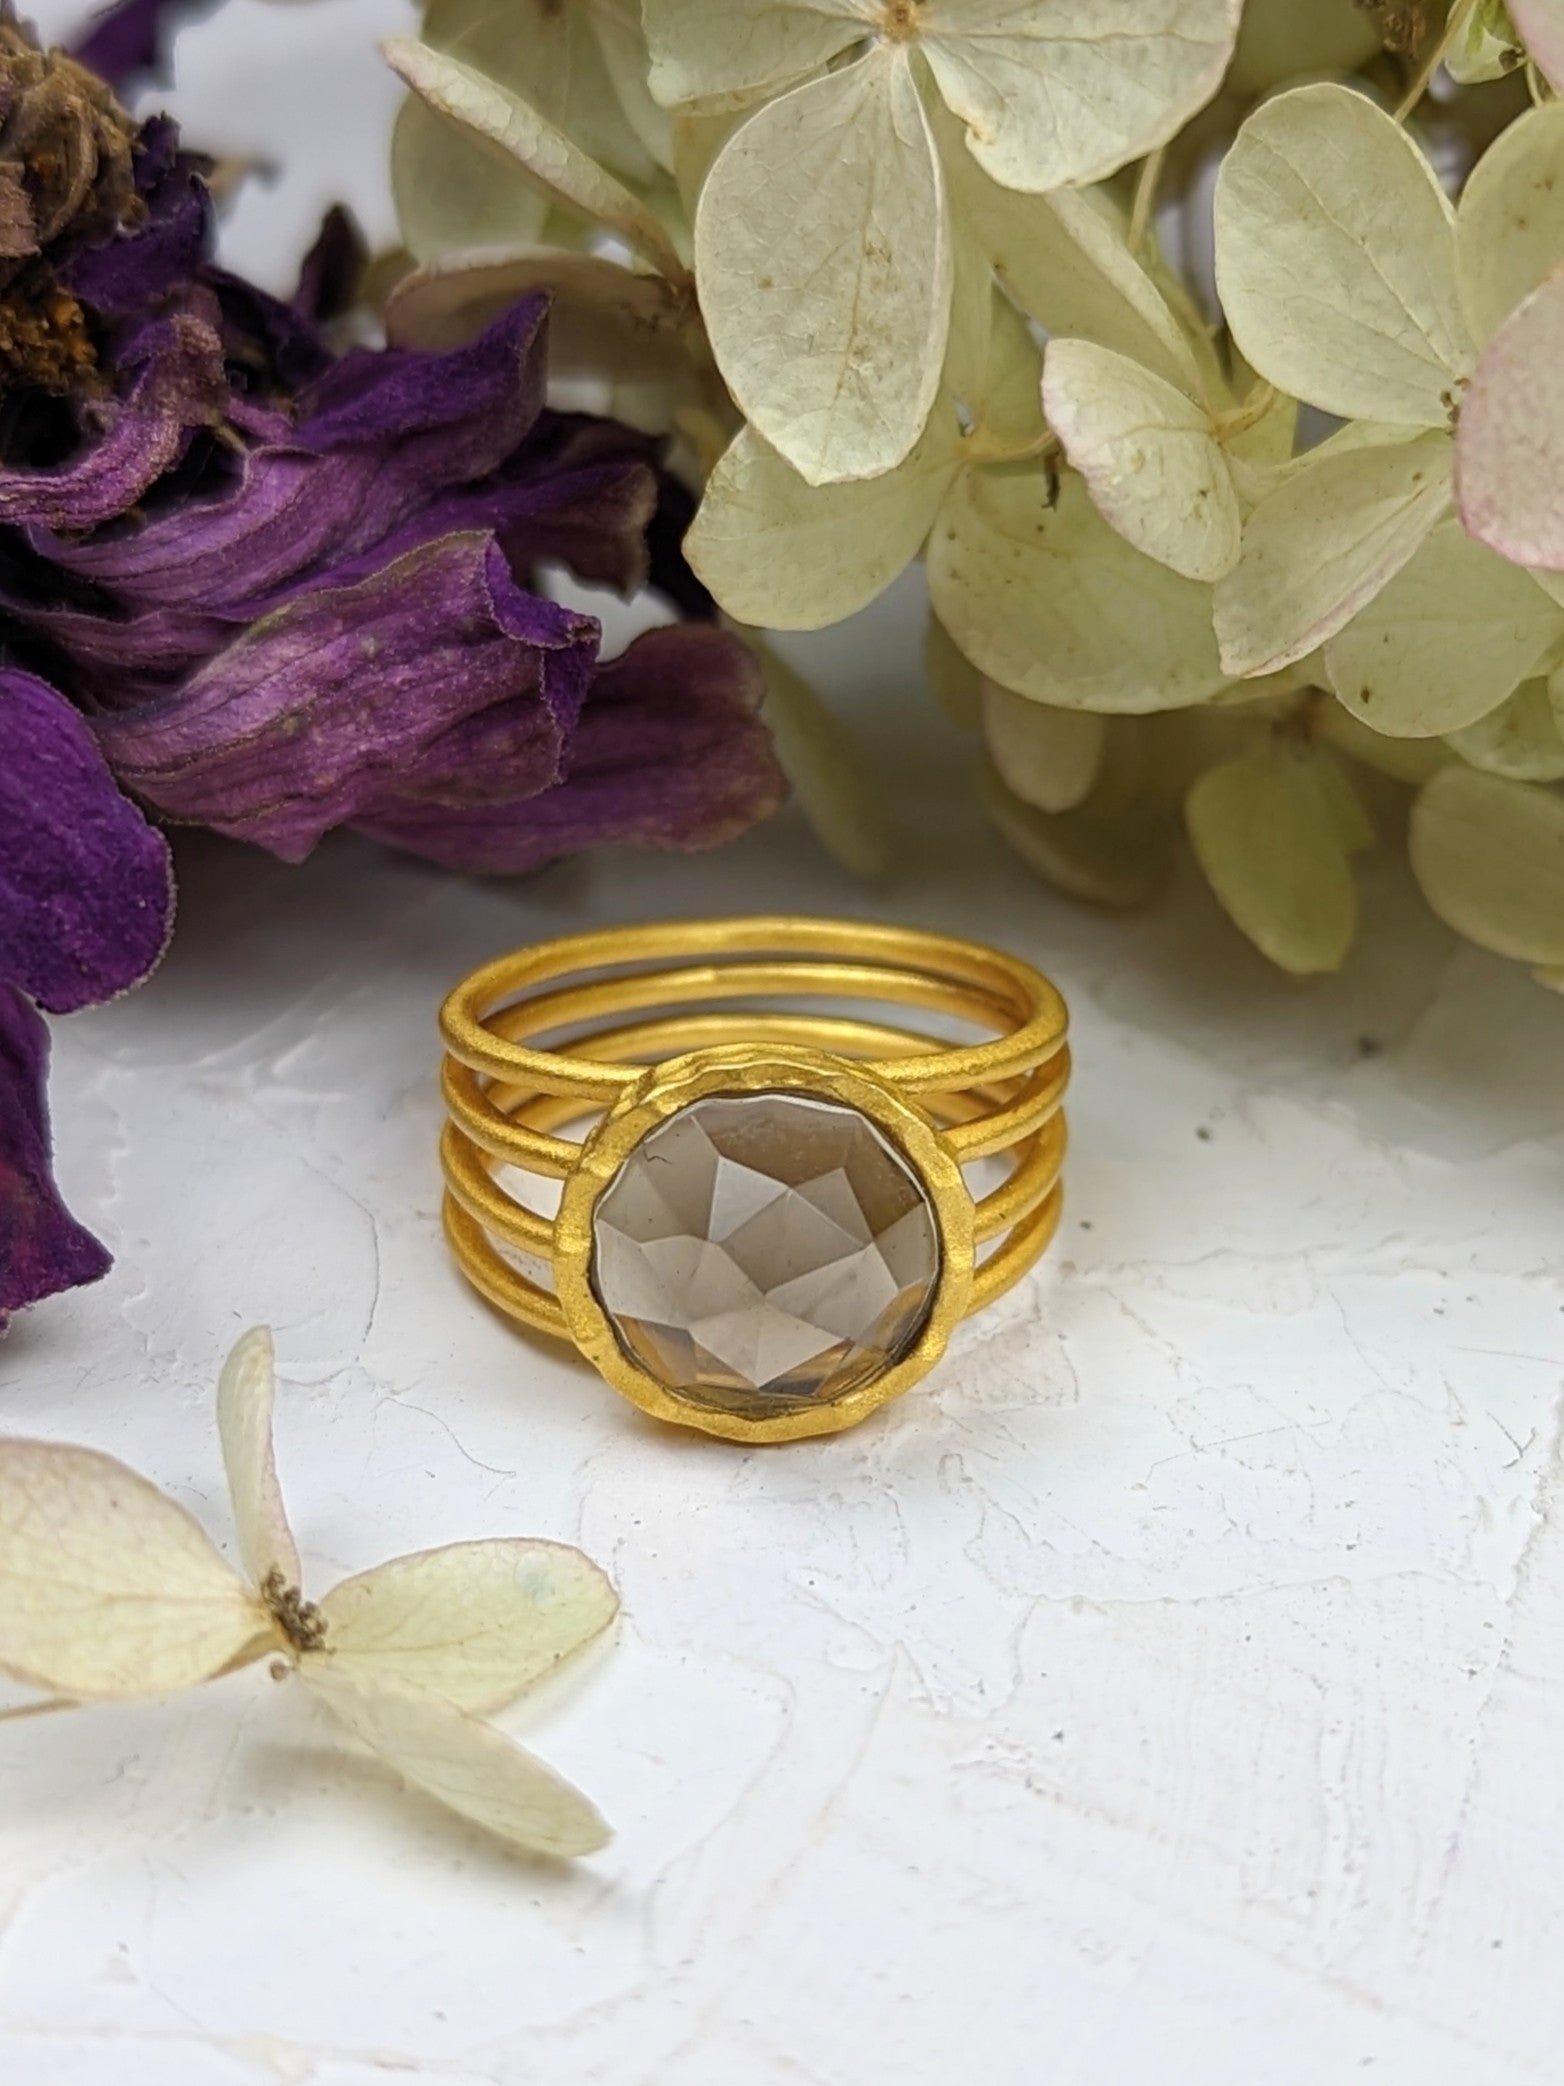 Juliet's Inconstant Moon Ring fine designer jewelry for men and women